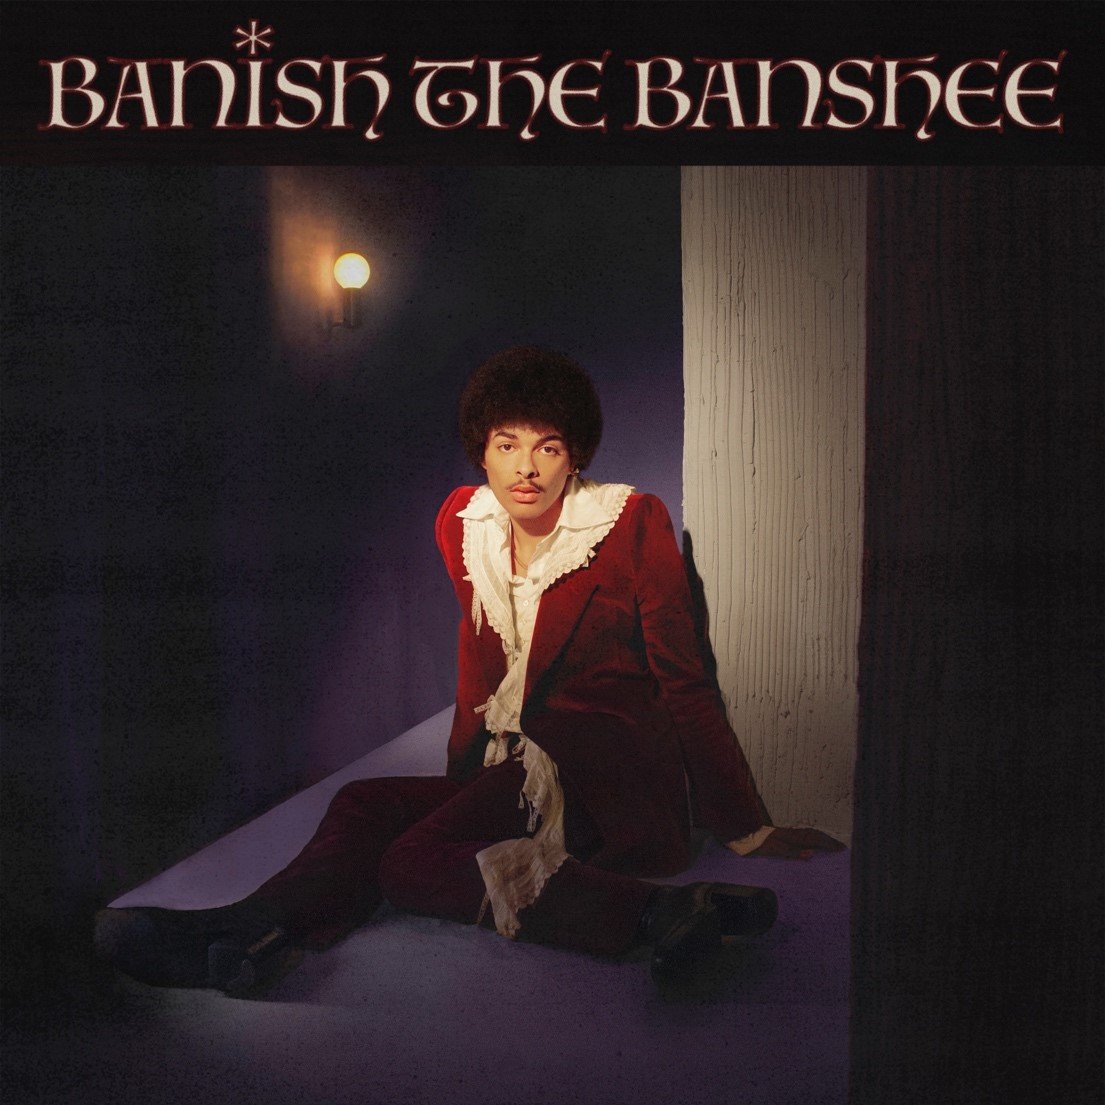 ALBUM: Isaac Dunbar - Banish The Banshee [ZIP FILE]